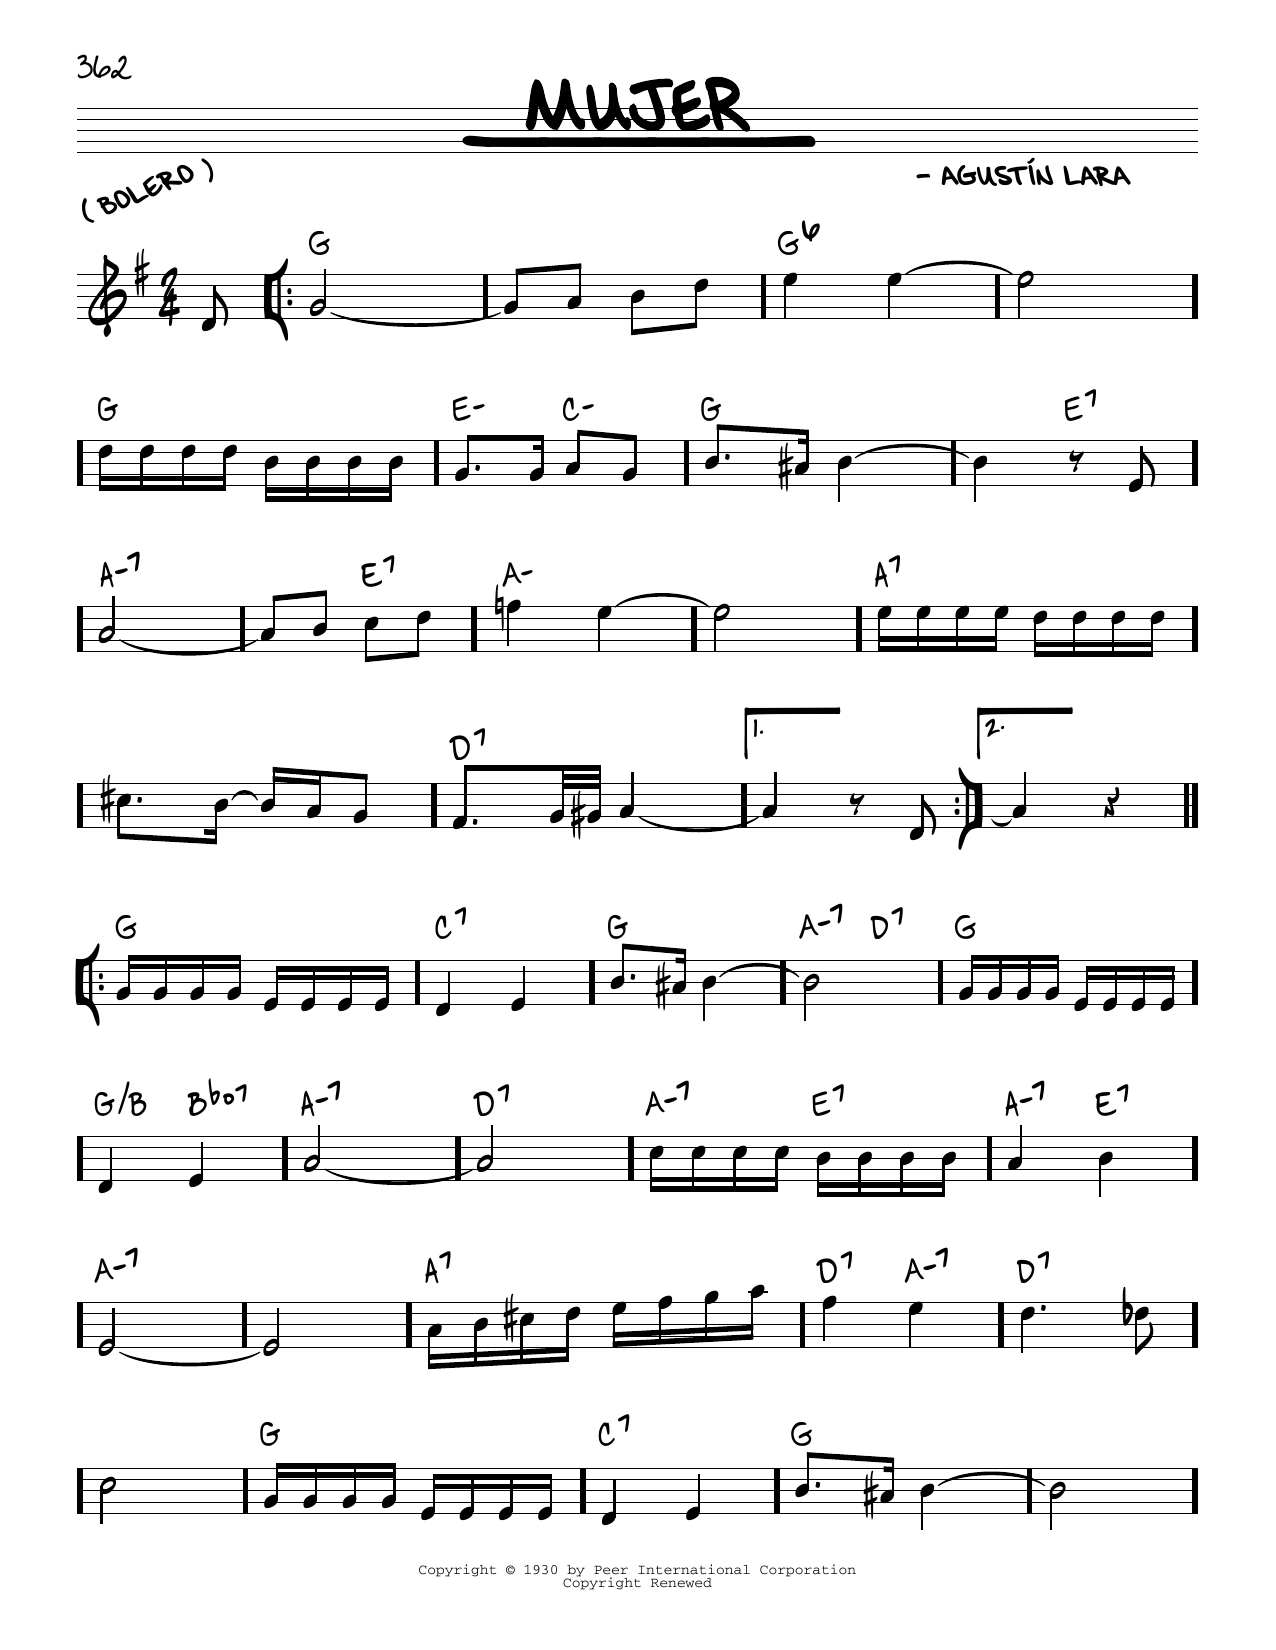 Agustin Lara Mujer Sheet Music Notes & Chords for Real Book – Melody & Chords - Download or Print PDF